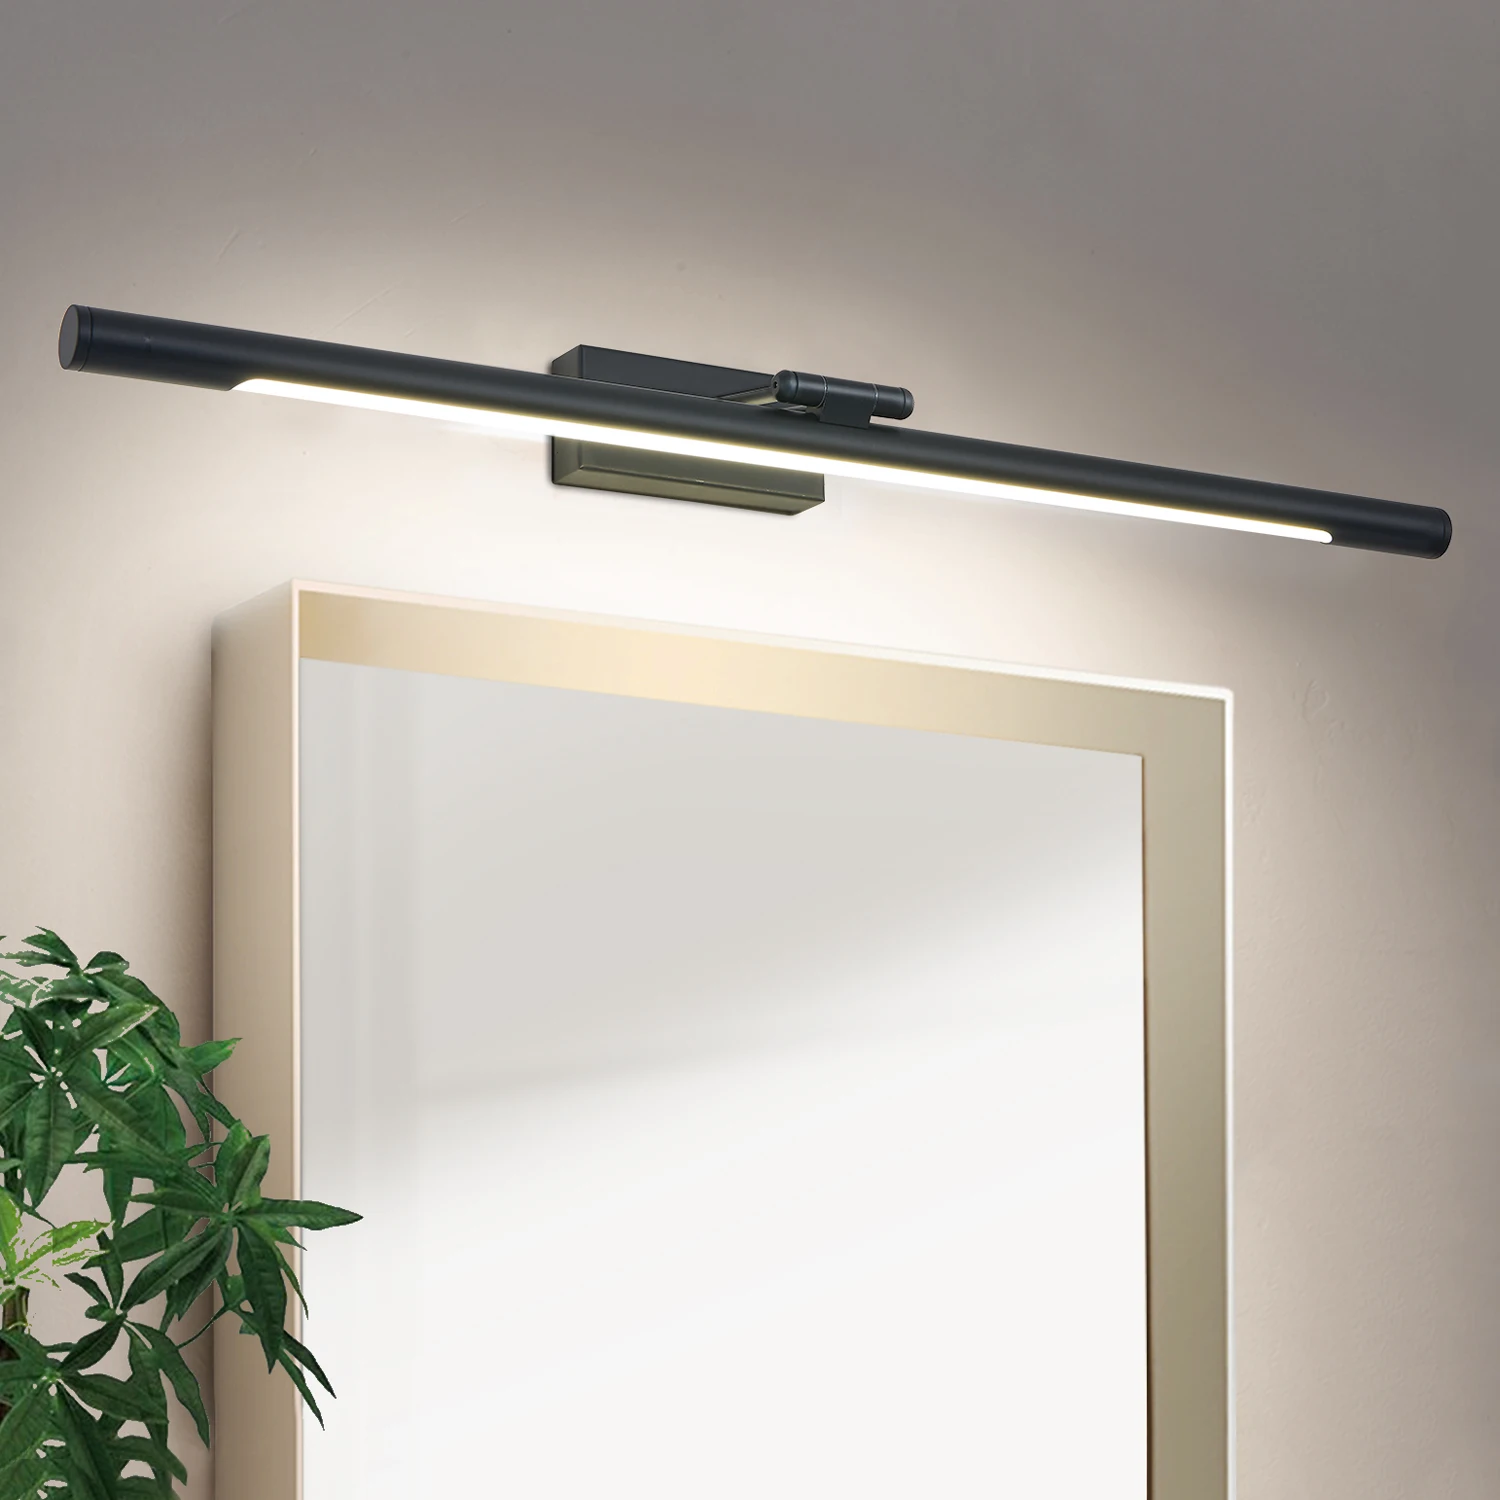 Black Picture Light Indoor LED Picture Lighting Fixtures Bedroom Wall Lamp